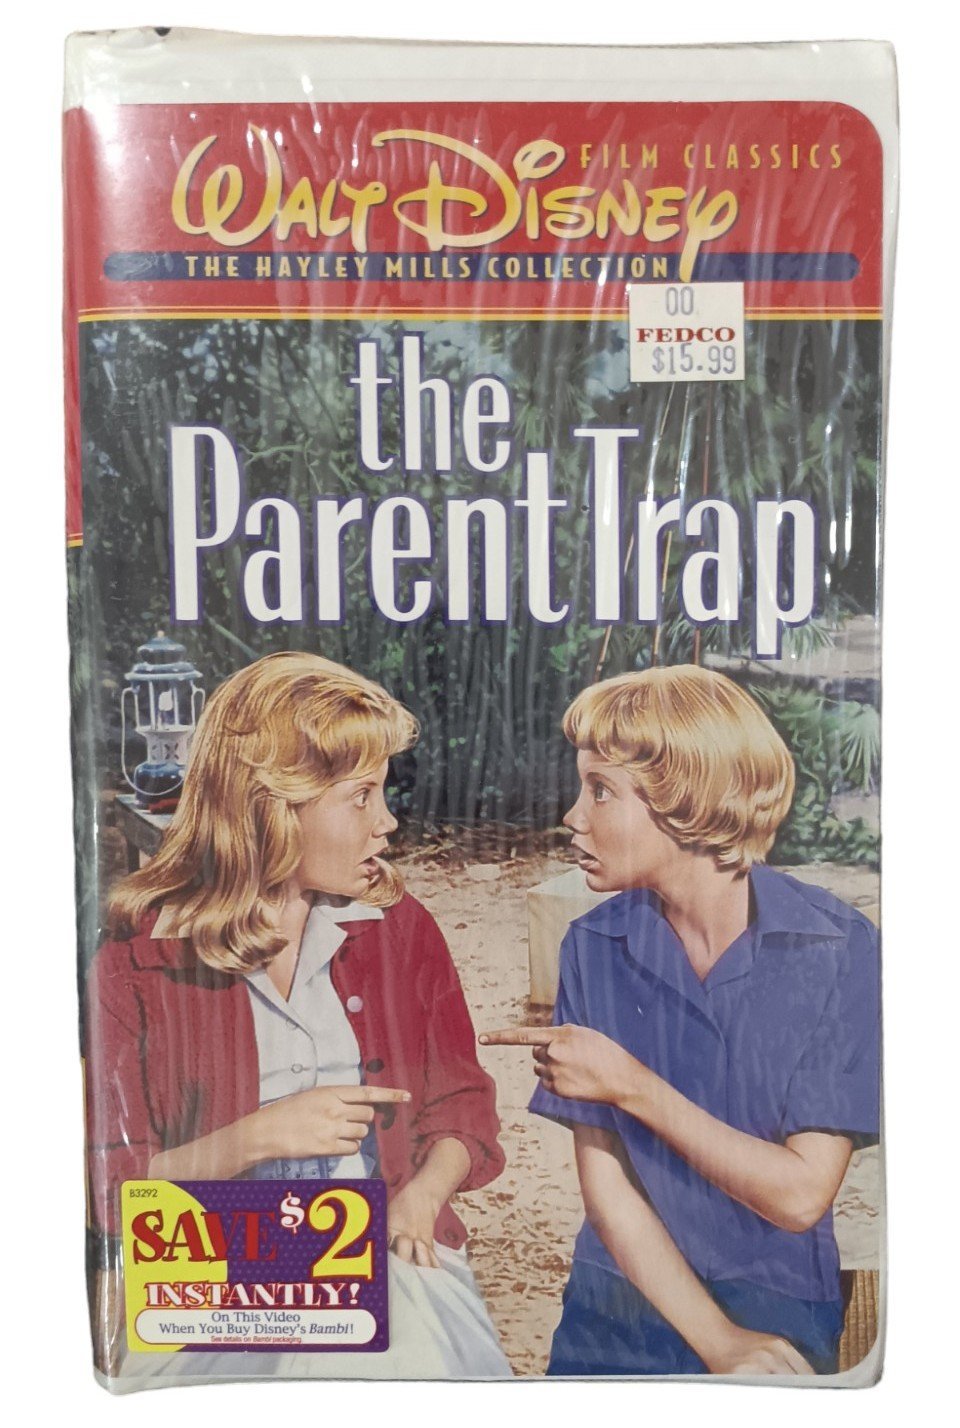 NOS VTG 1960 Walt Disney Film Classipcs The Parent Trap FACTORY SEALED VHS Movie 8nZ076w7e